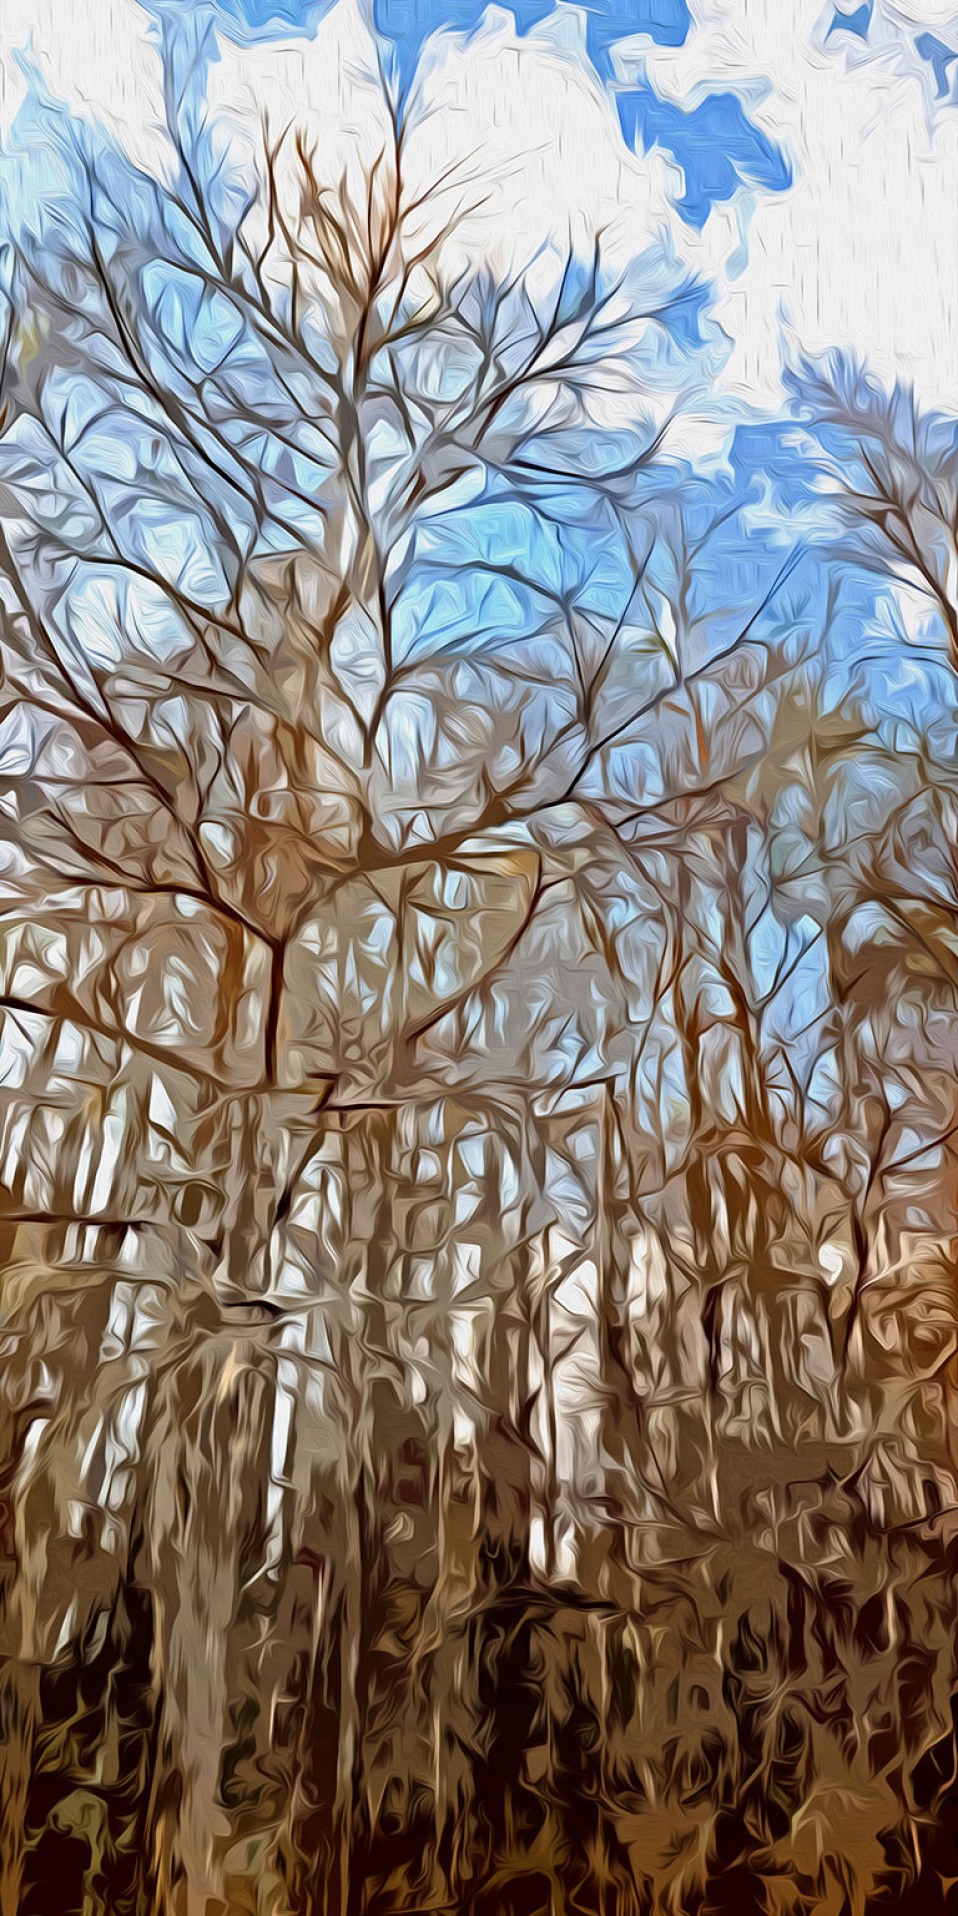 “Winter Cypress,” Corkscrew Swamp Sanctuary, 2008